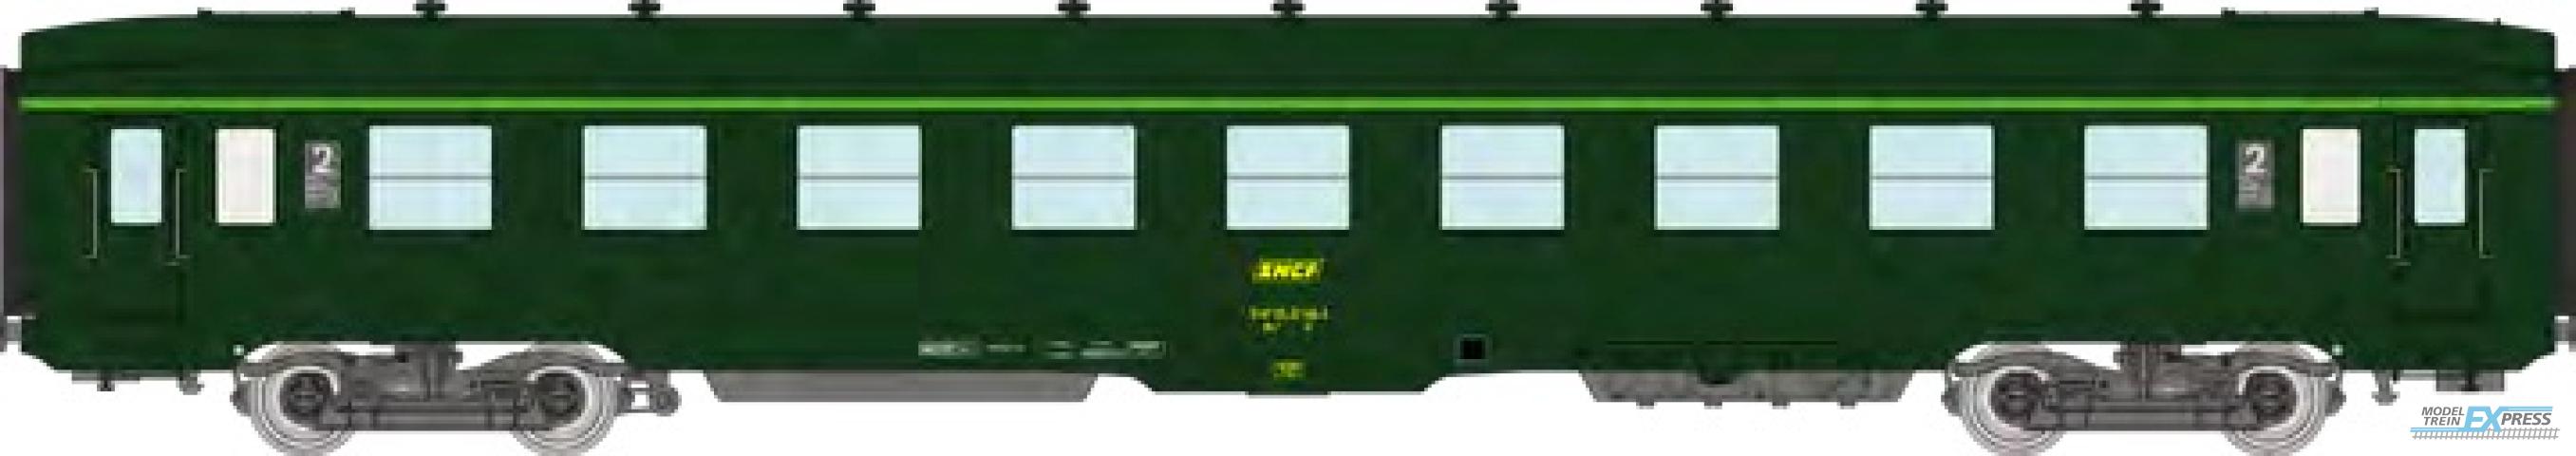 REE models VB-407 U52 DEV AO Sleeping Cars B9c9 N° 51 87 59-37 146-2 Green 301, boxed SNCF logo Era IV-V